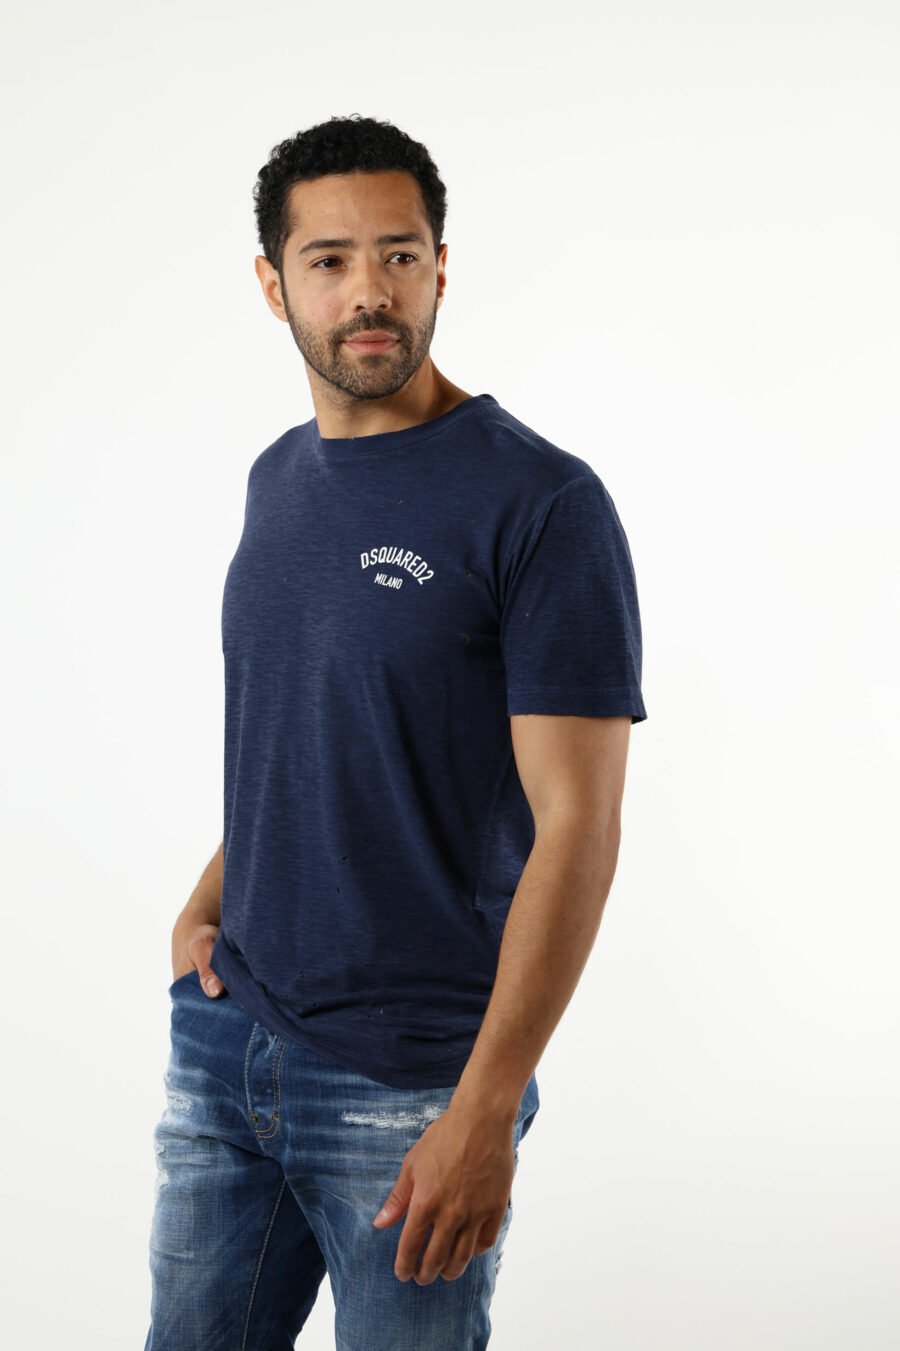 Dark blue T-shirt with mini-logo "milano" - 111193